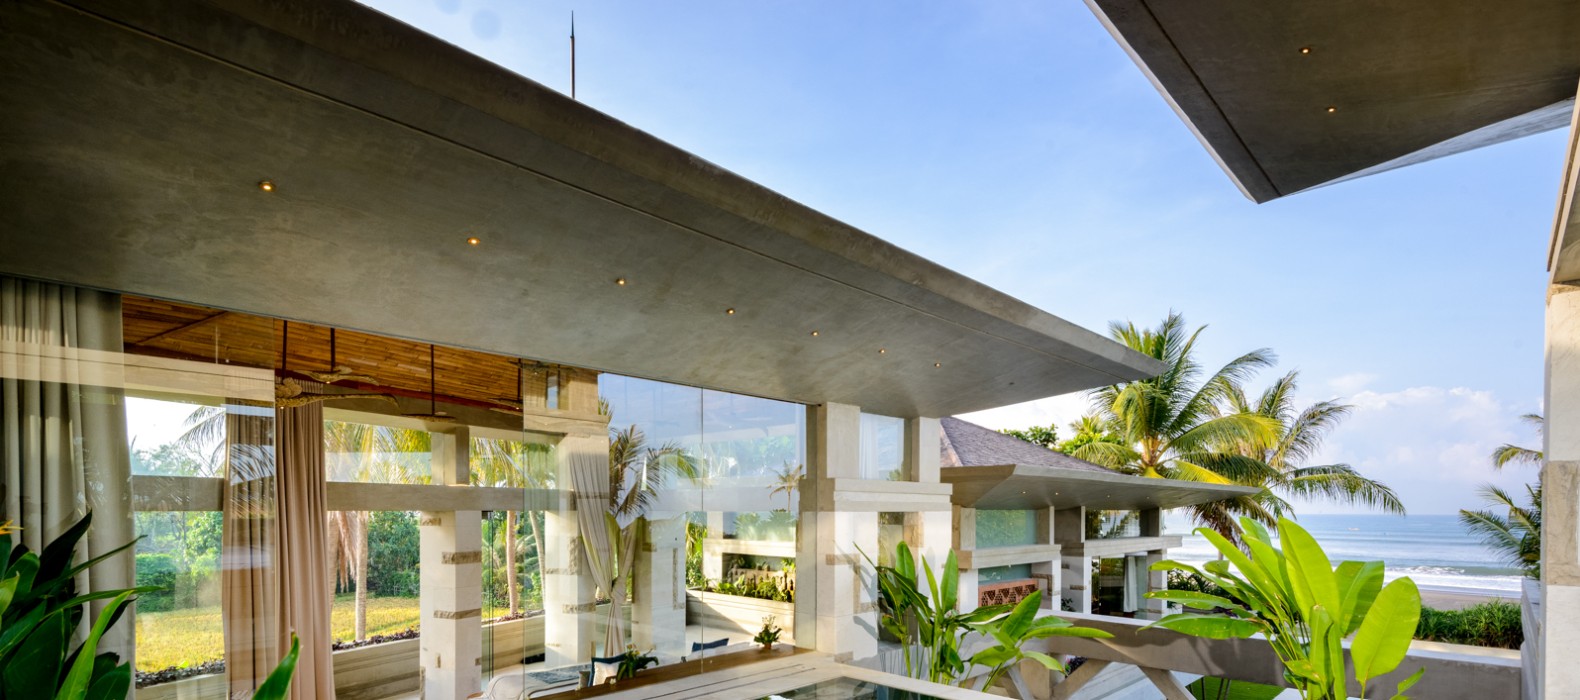 Exterior area view of Villa La Vela in Bali